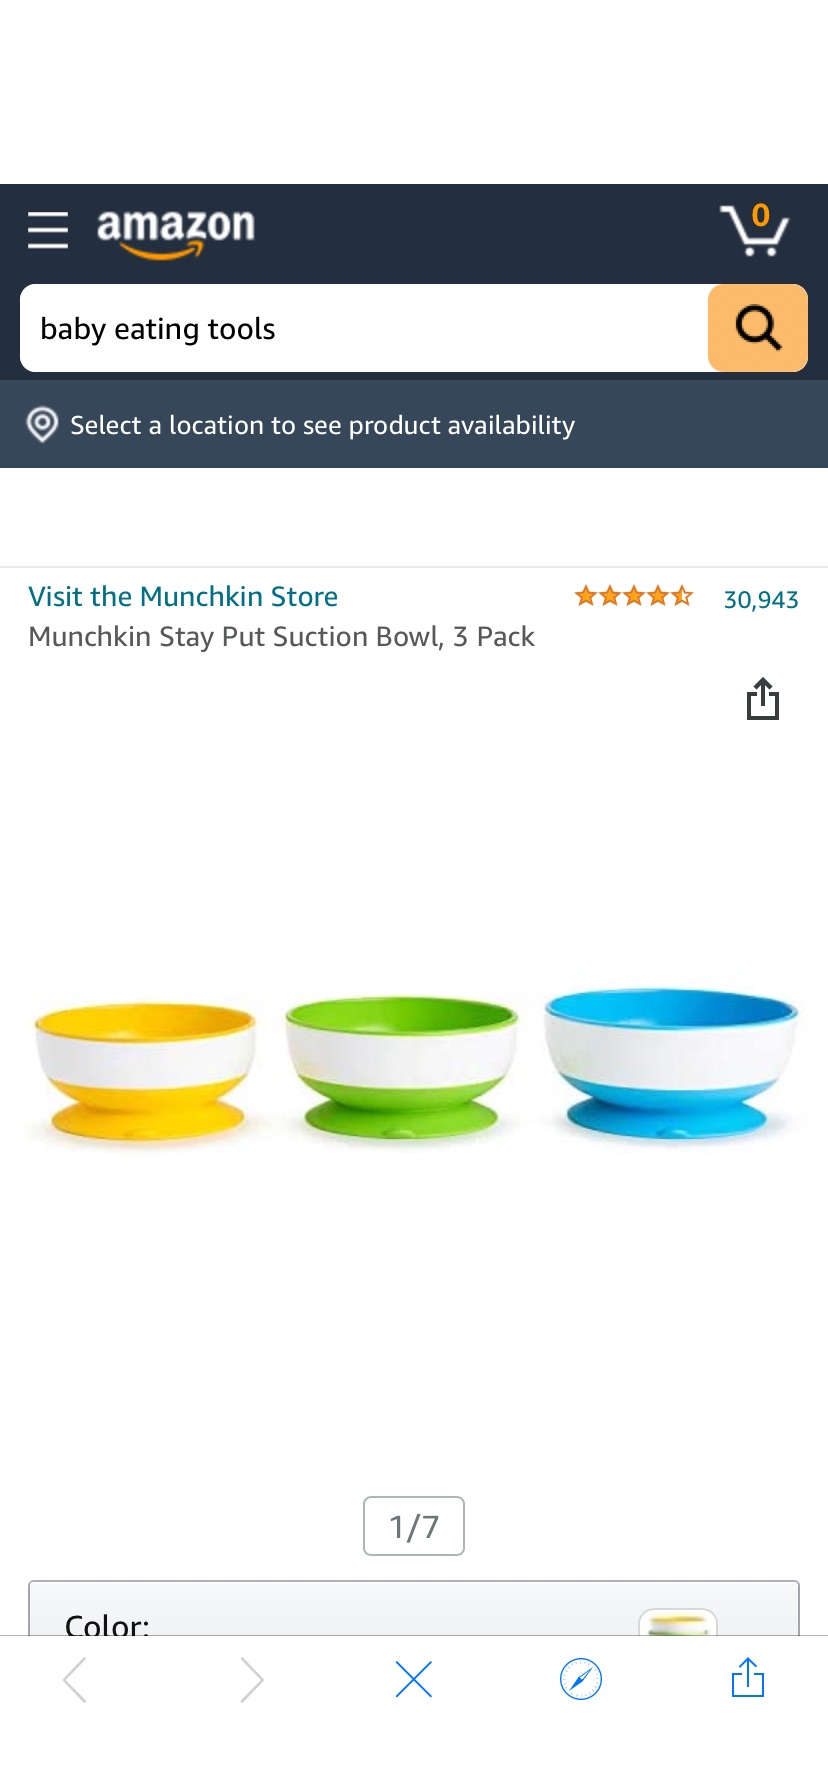 Amazon.com: Munchkin Stay Put Suction Bowl, 3 Pack: Baby宝宝吸盘碗